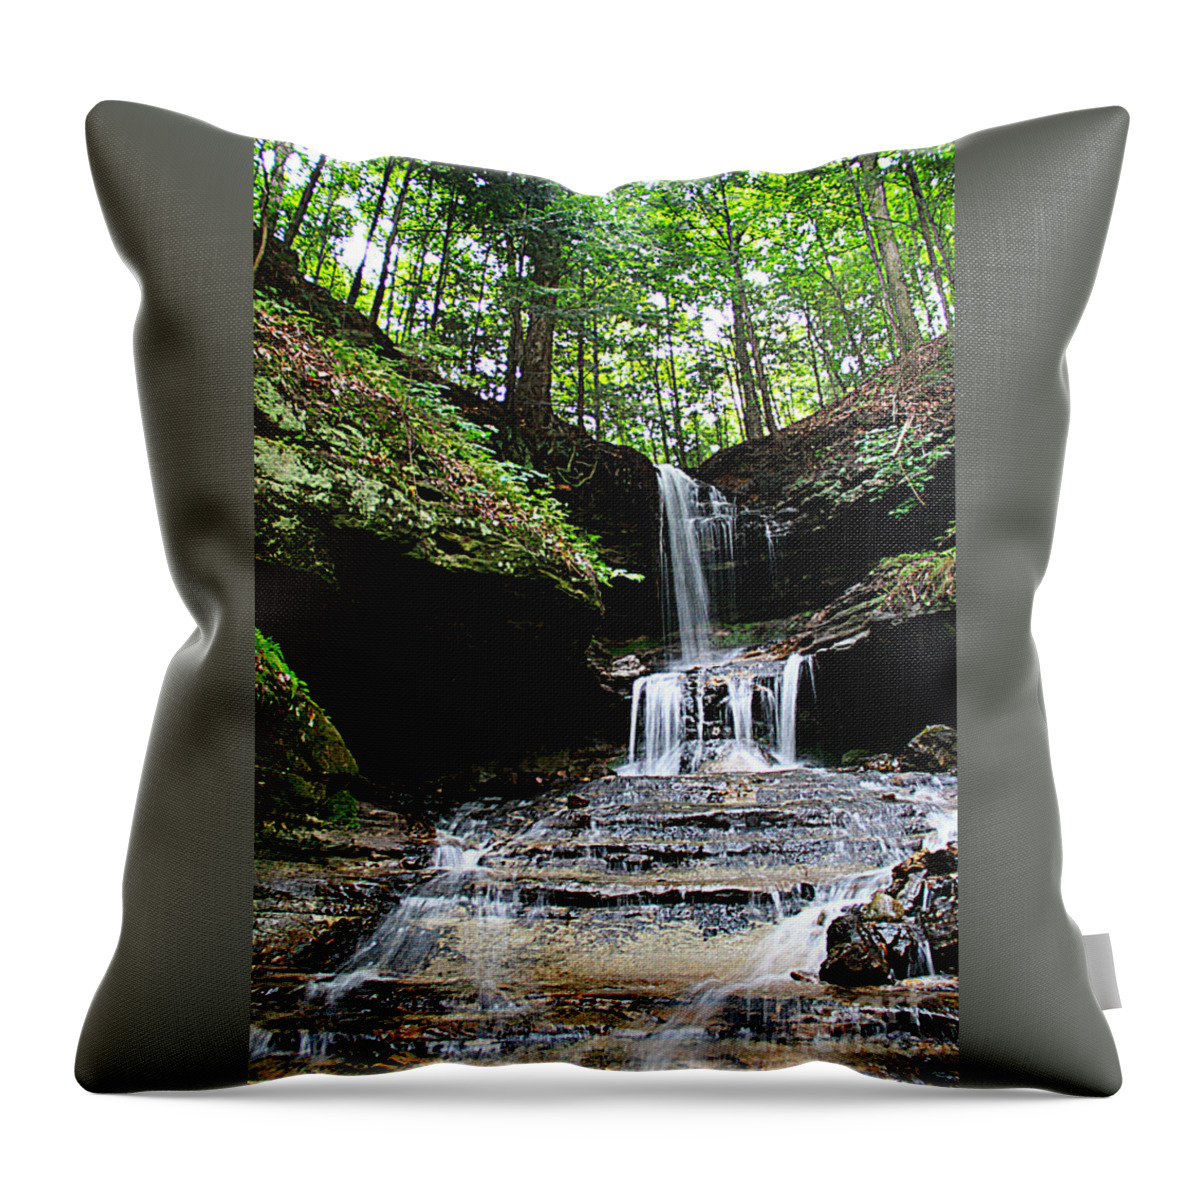 Horseshoe Falls Throw Pillow featuring the photograph Horseshoe Falls #6736 by Mark J Seefeldt